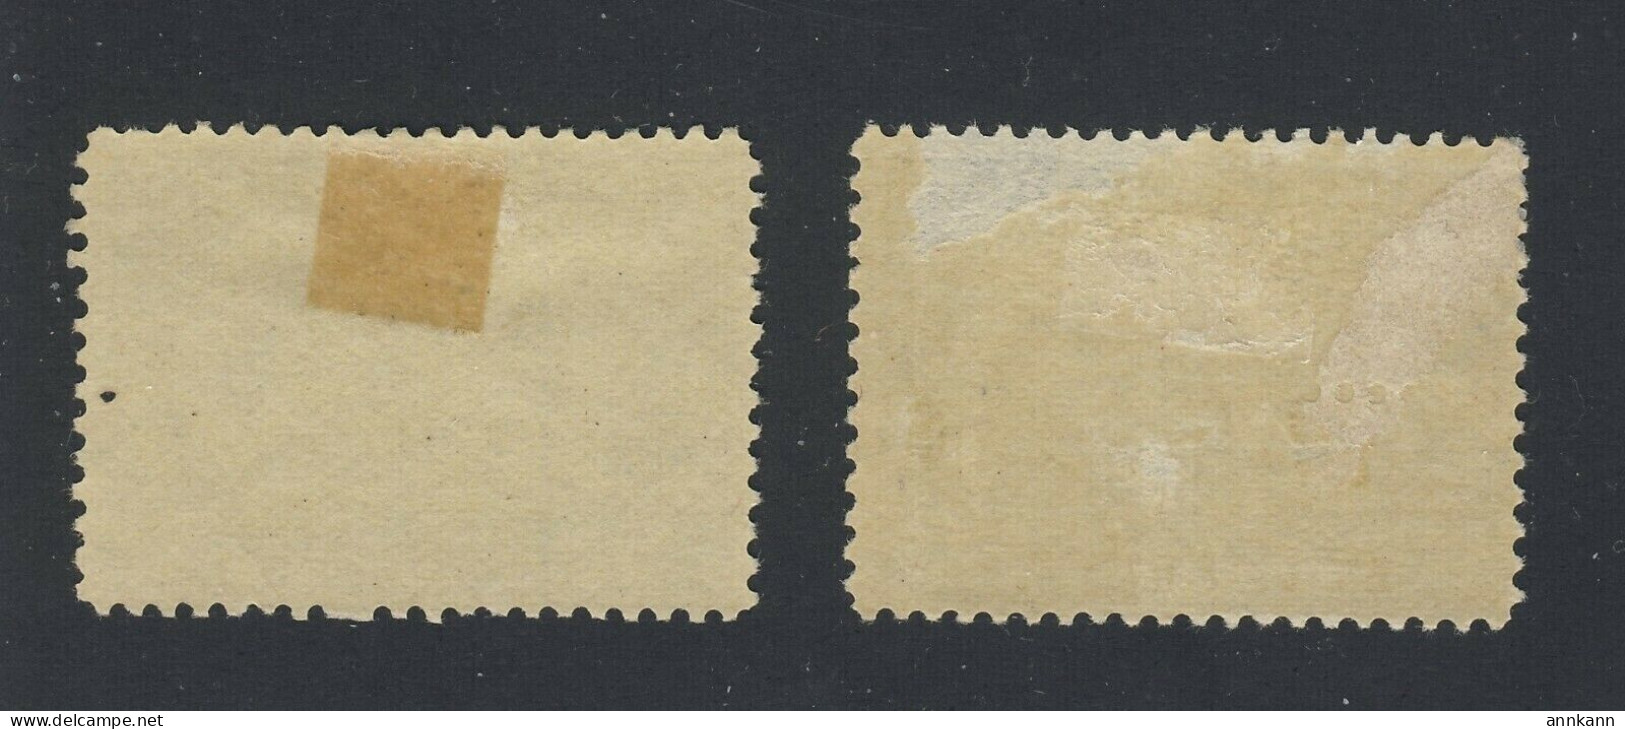 2x Canada Victoria Jubilee MH Stamps #52-2c MHR VF 54-5c MH Thin F/VF GV= $95.00 - Ungebraucht